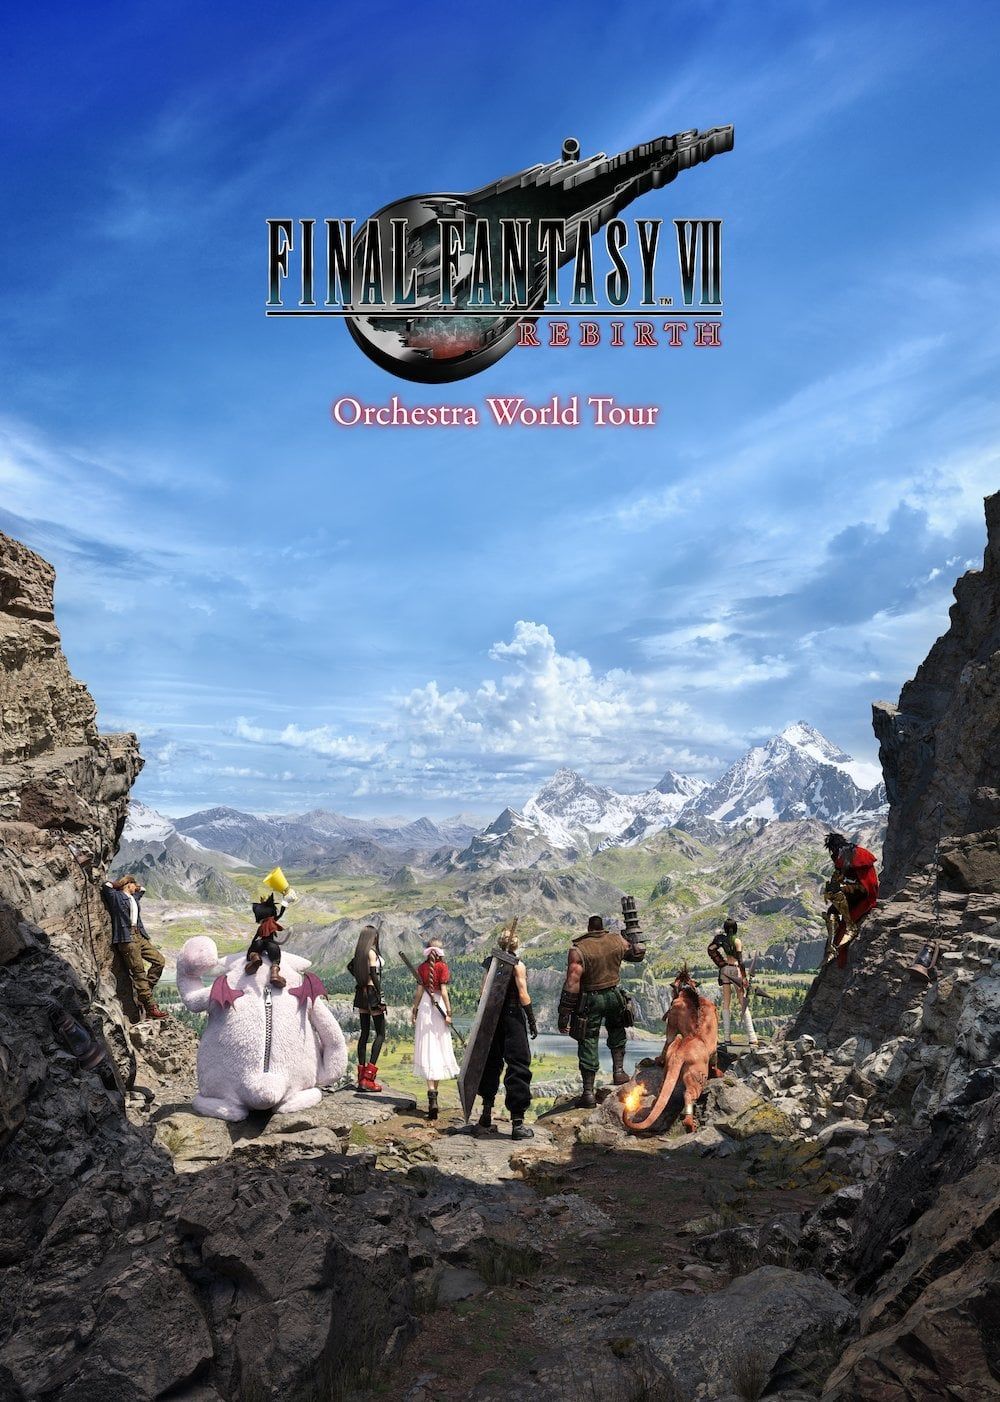 Final Fantasy VII Rebirth Orchestra World Tour